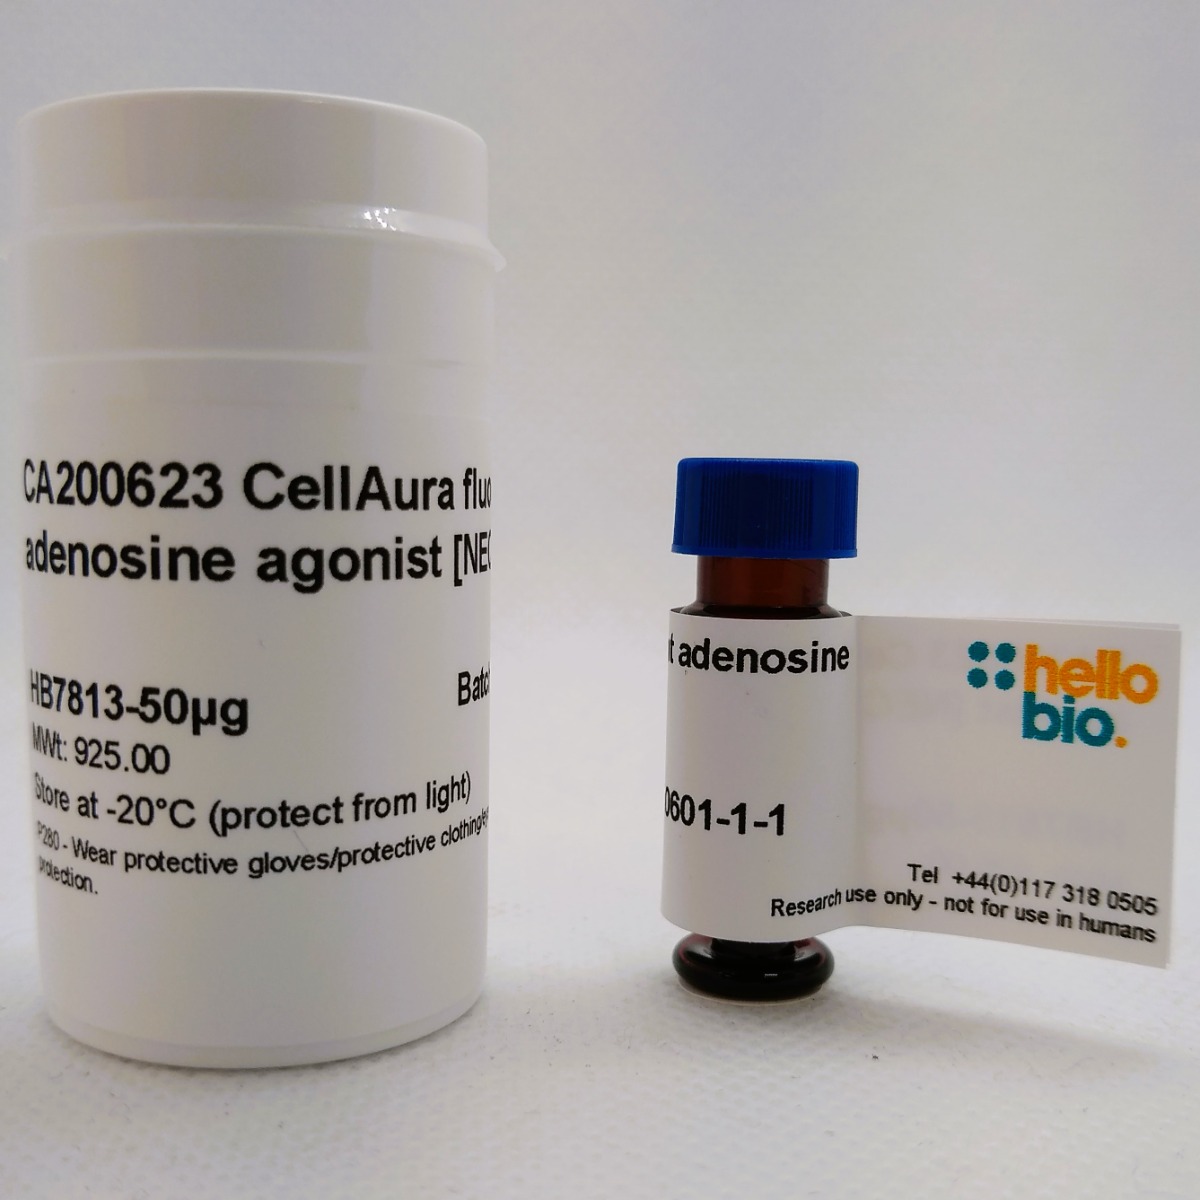 CellAura fluorescent adenosine agonist [NECA] product vial image | Hello Bio